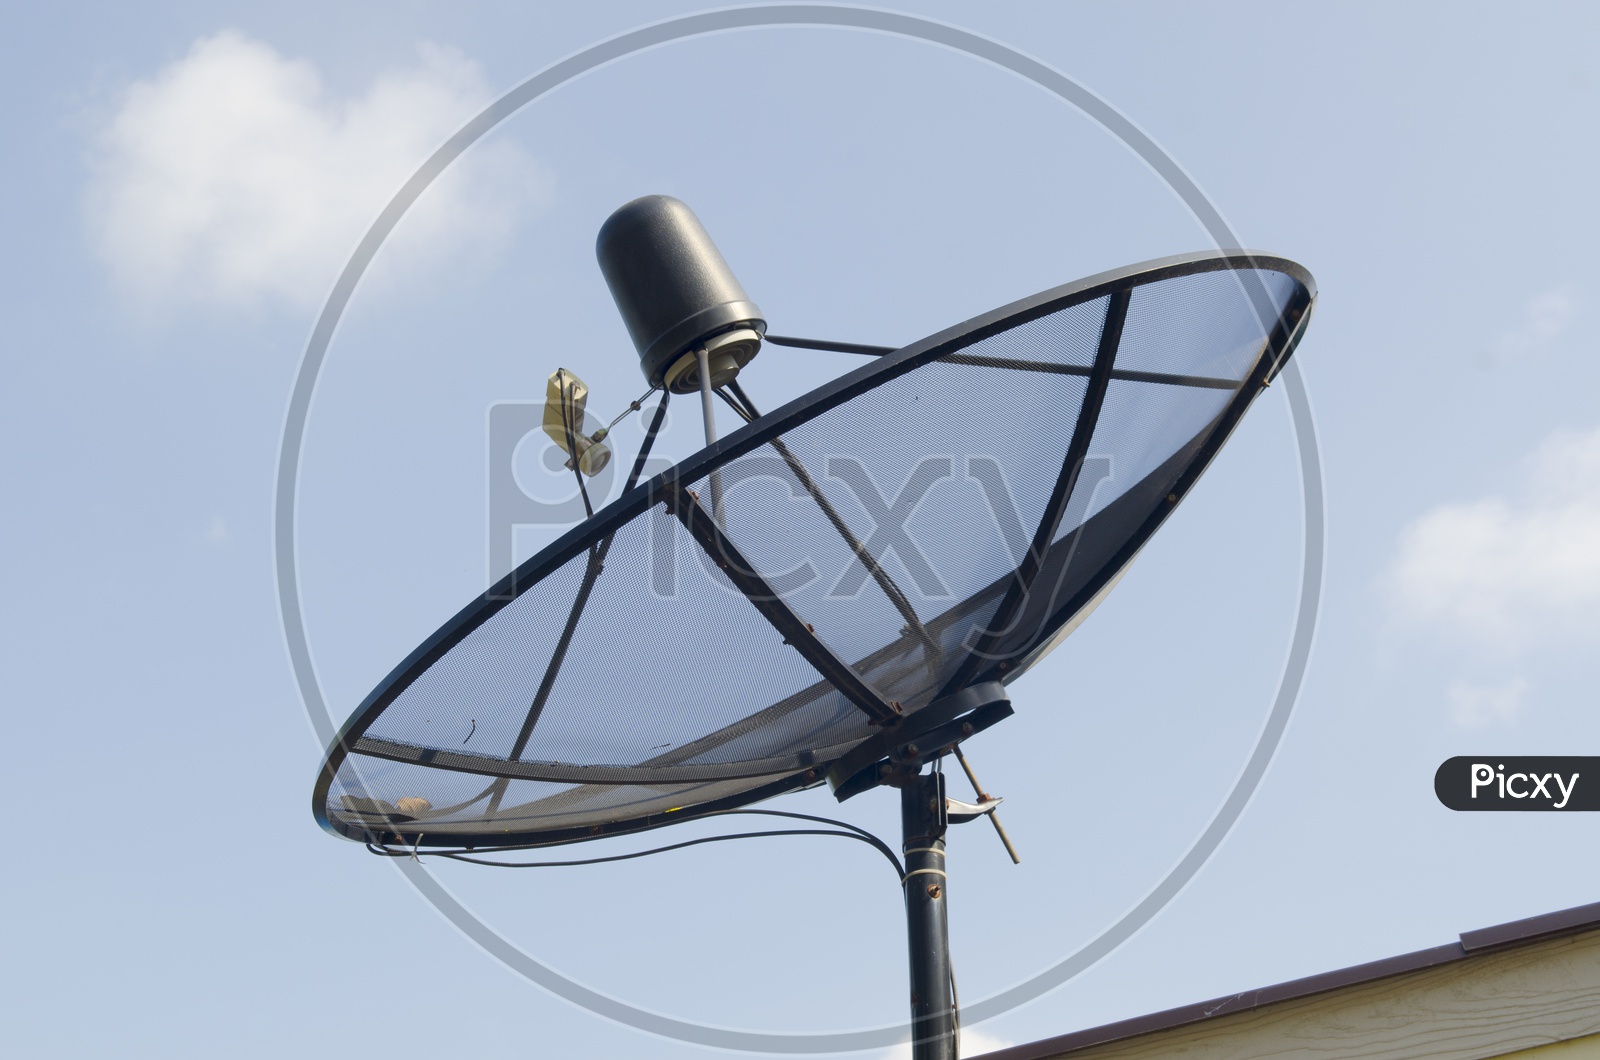 Satellite dish  Antenna  With Blue Sky